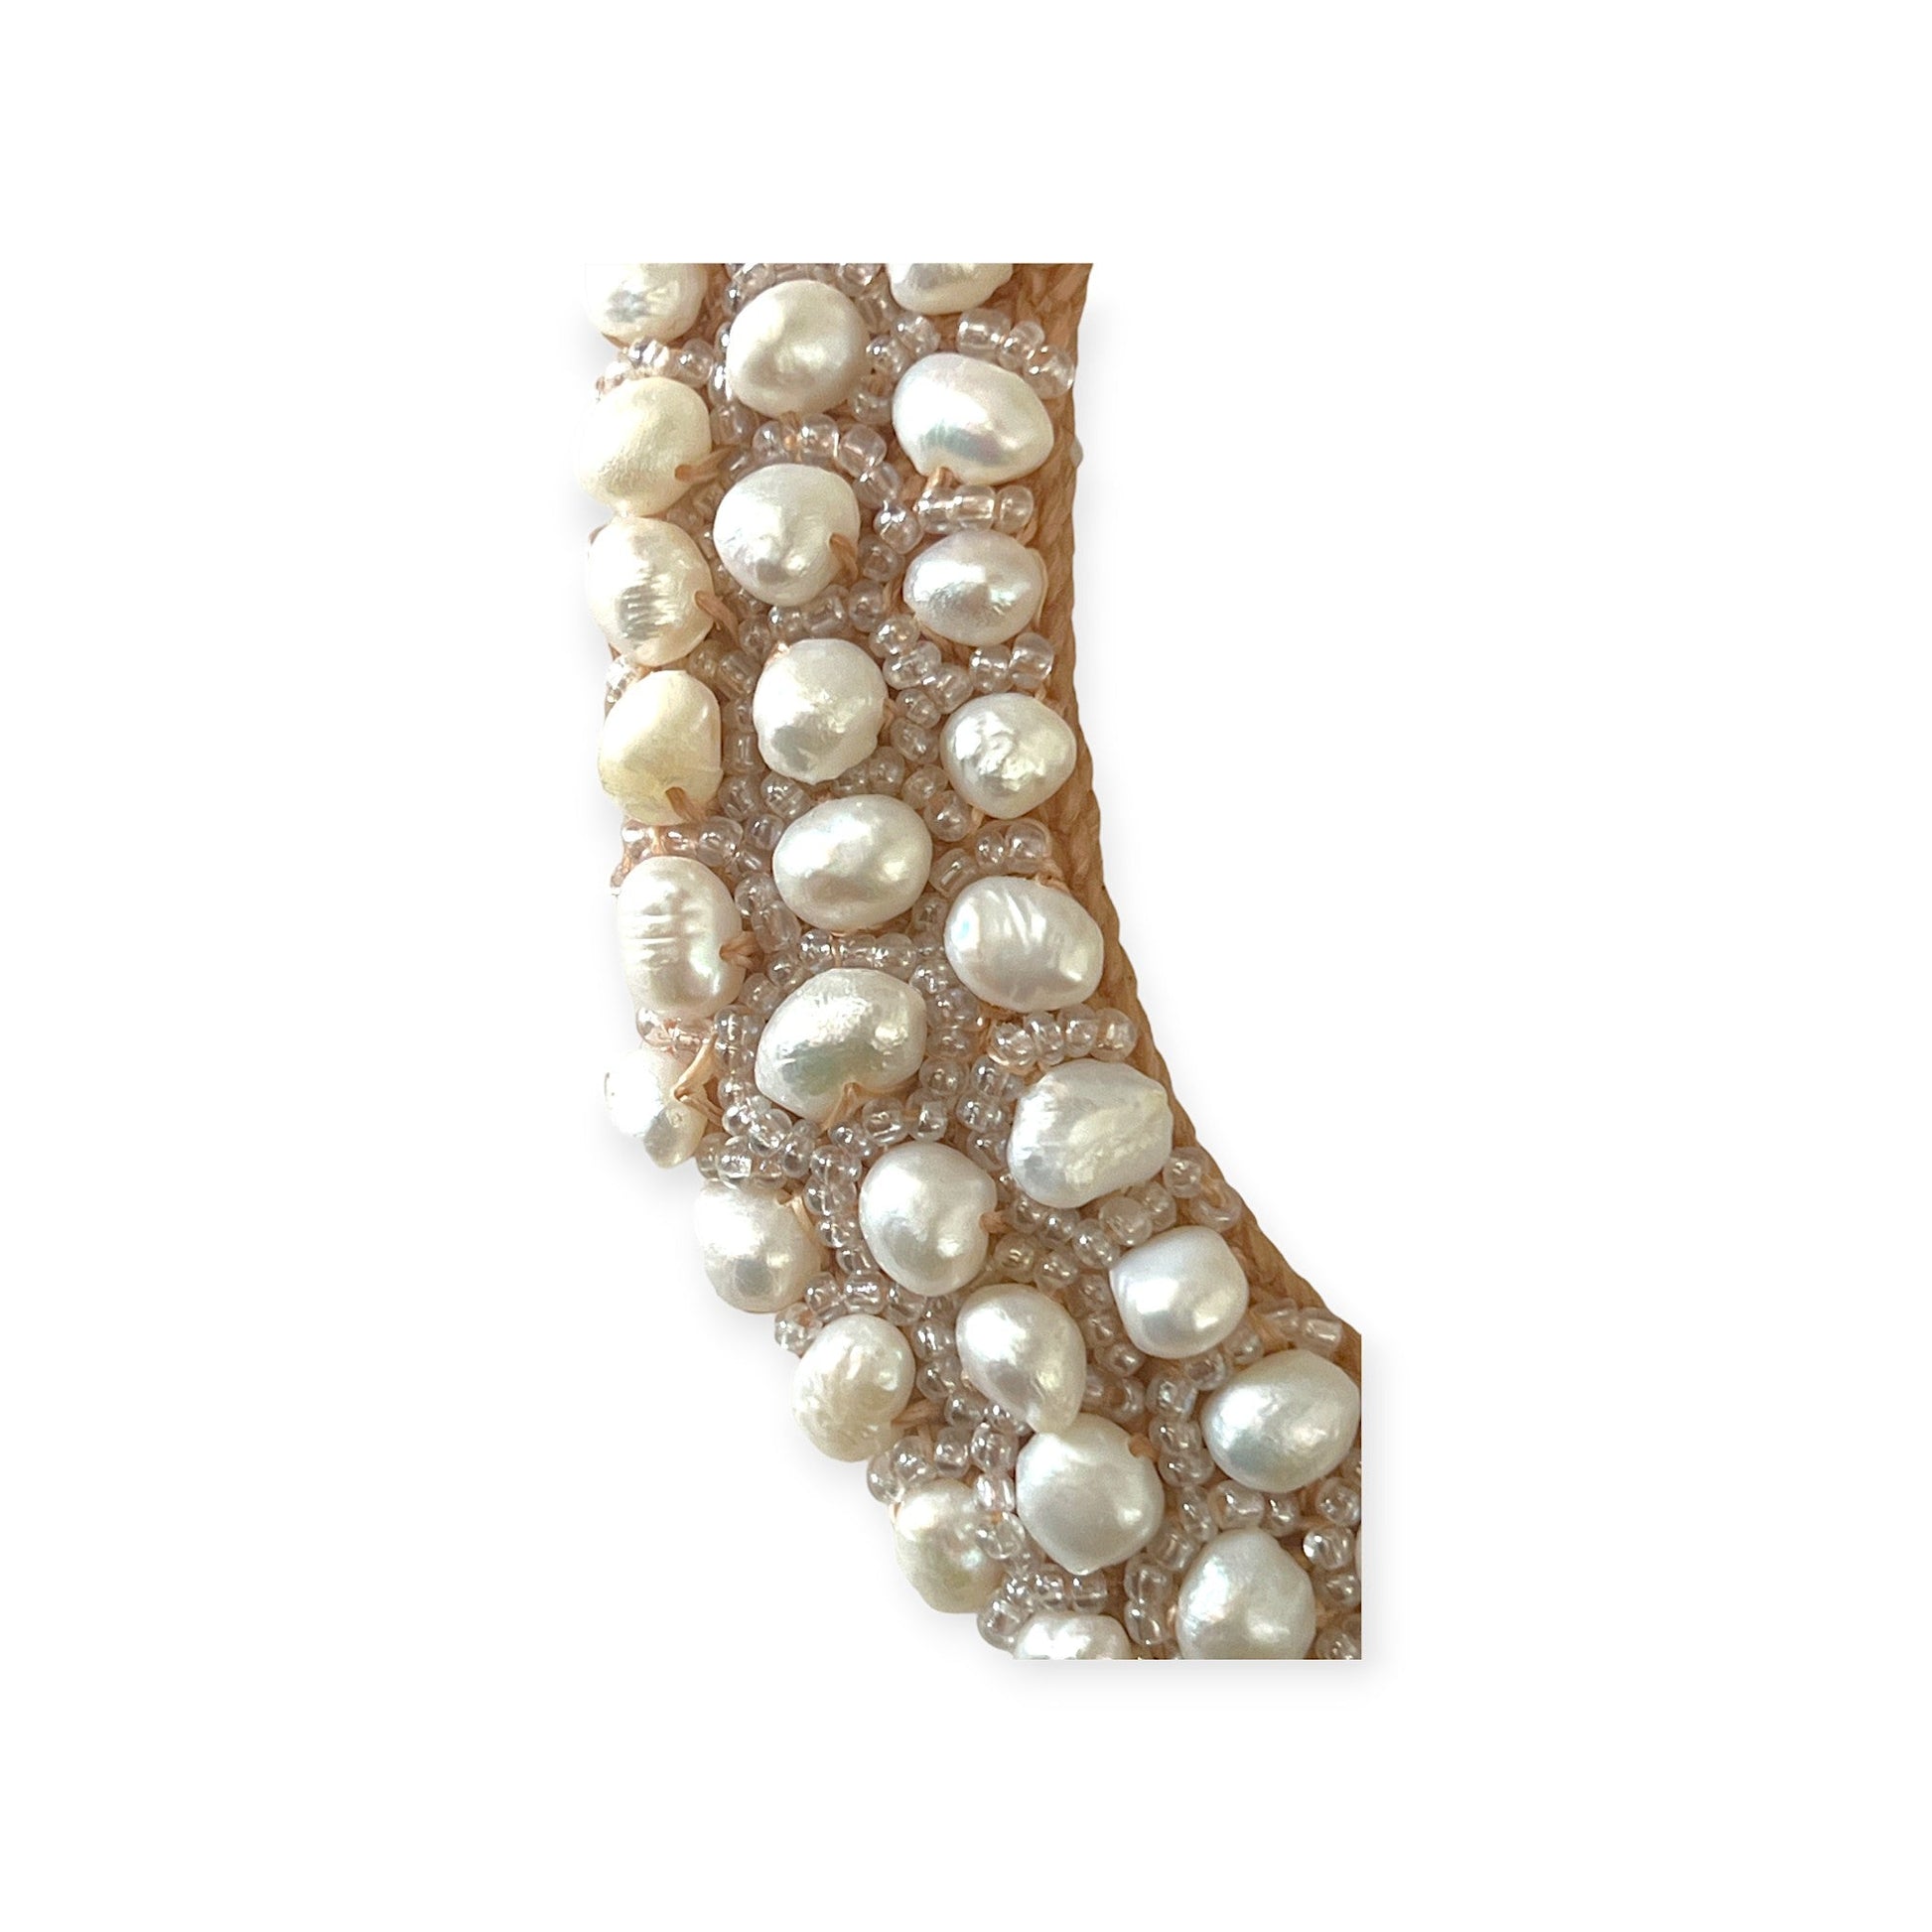 Beaded pearl choker necklace in neutral earth tones - Sundara Joon